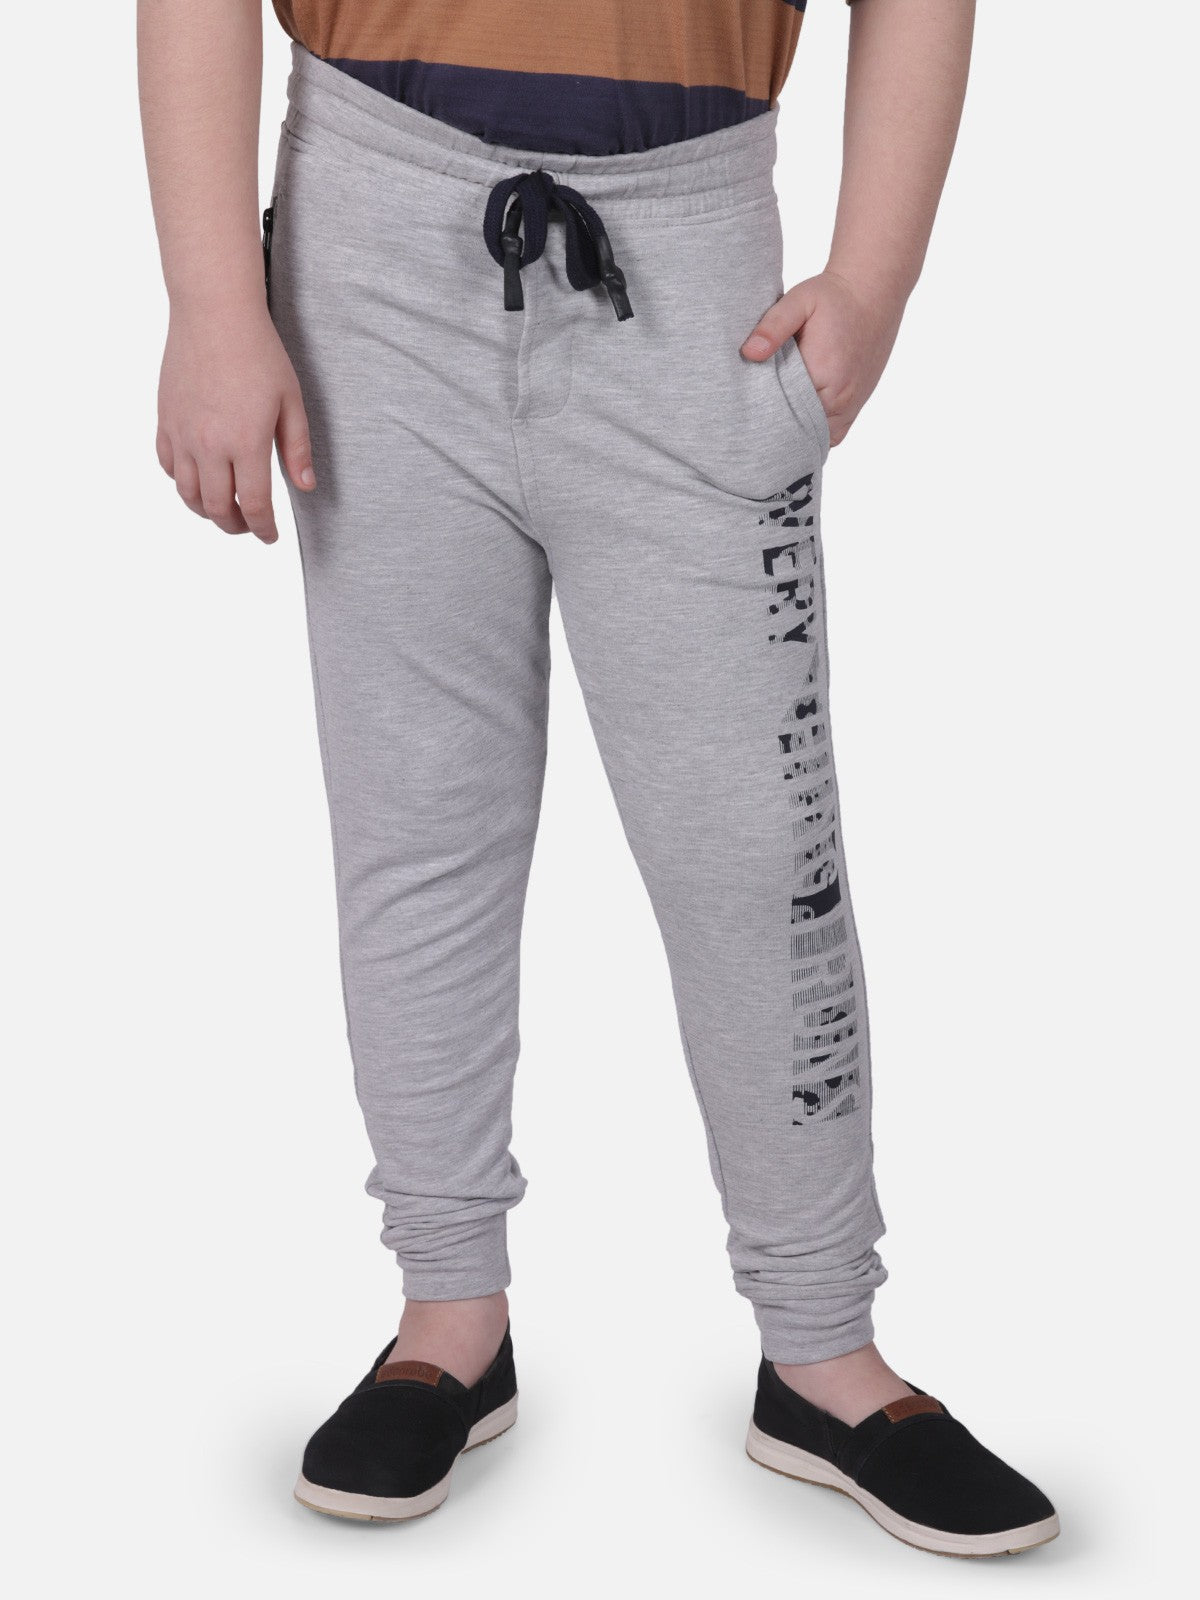 Boy's Ash Grey Trouser - EBBT18-019